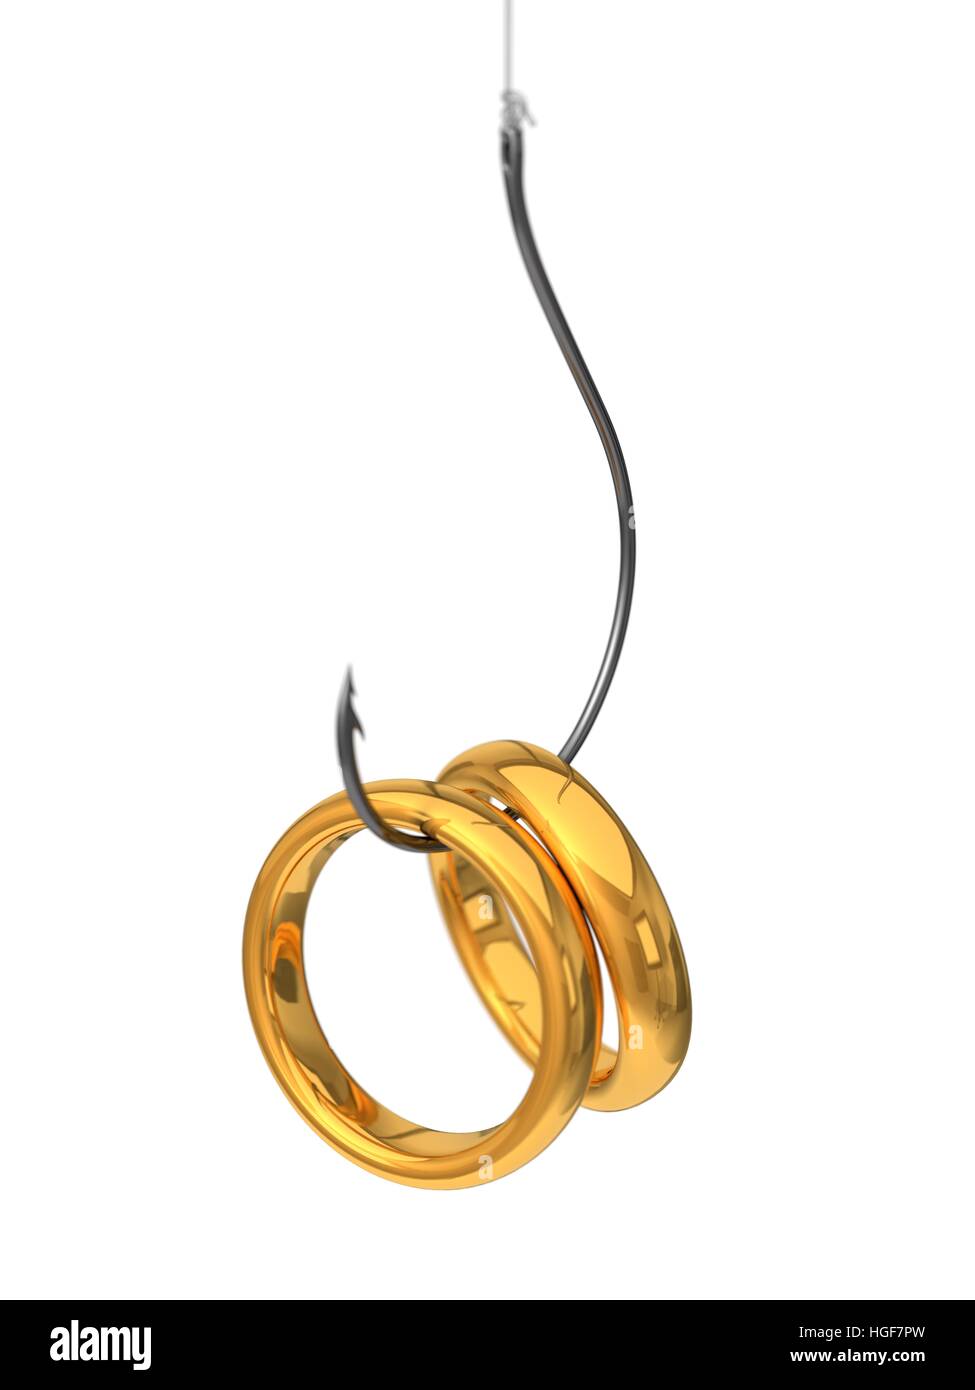 3d illustration of golden rings on the fishing hook Stock Photo